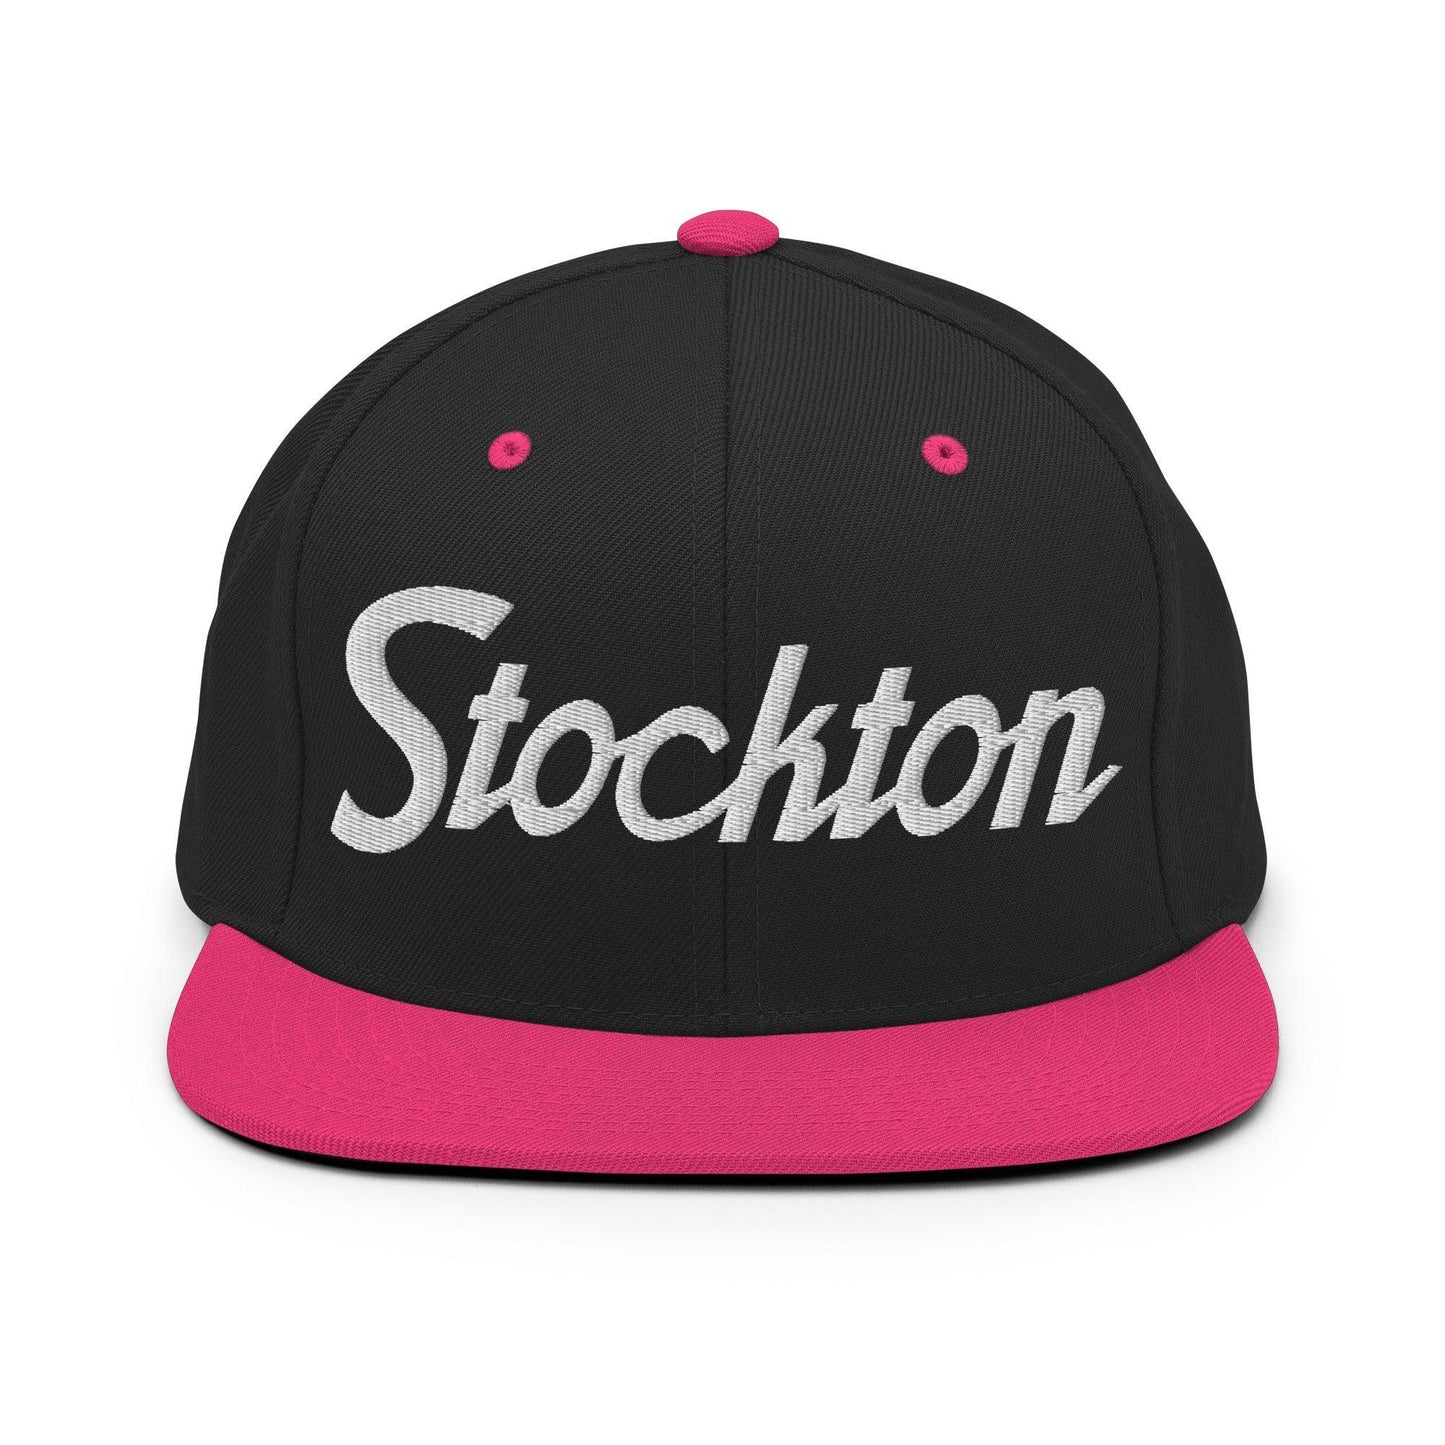 Stockton Script Snapback Hat Black/ Neon Pink